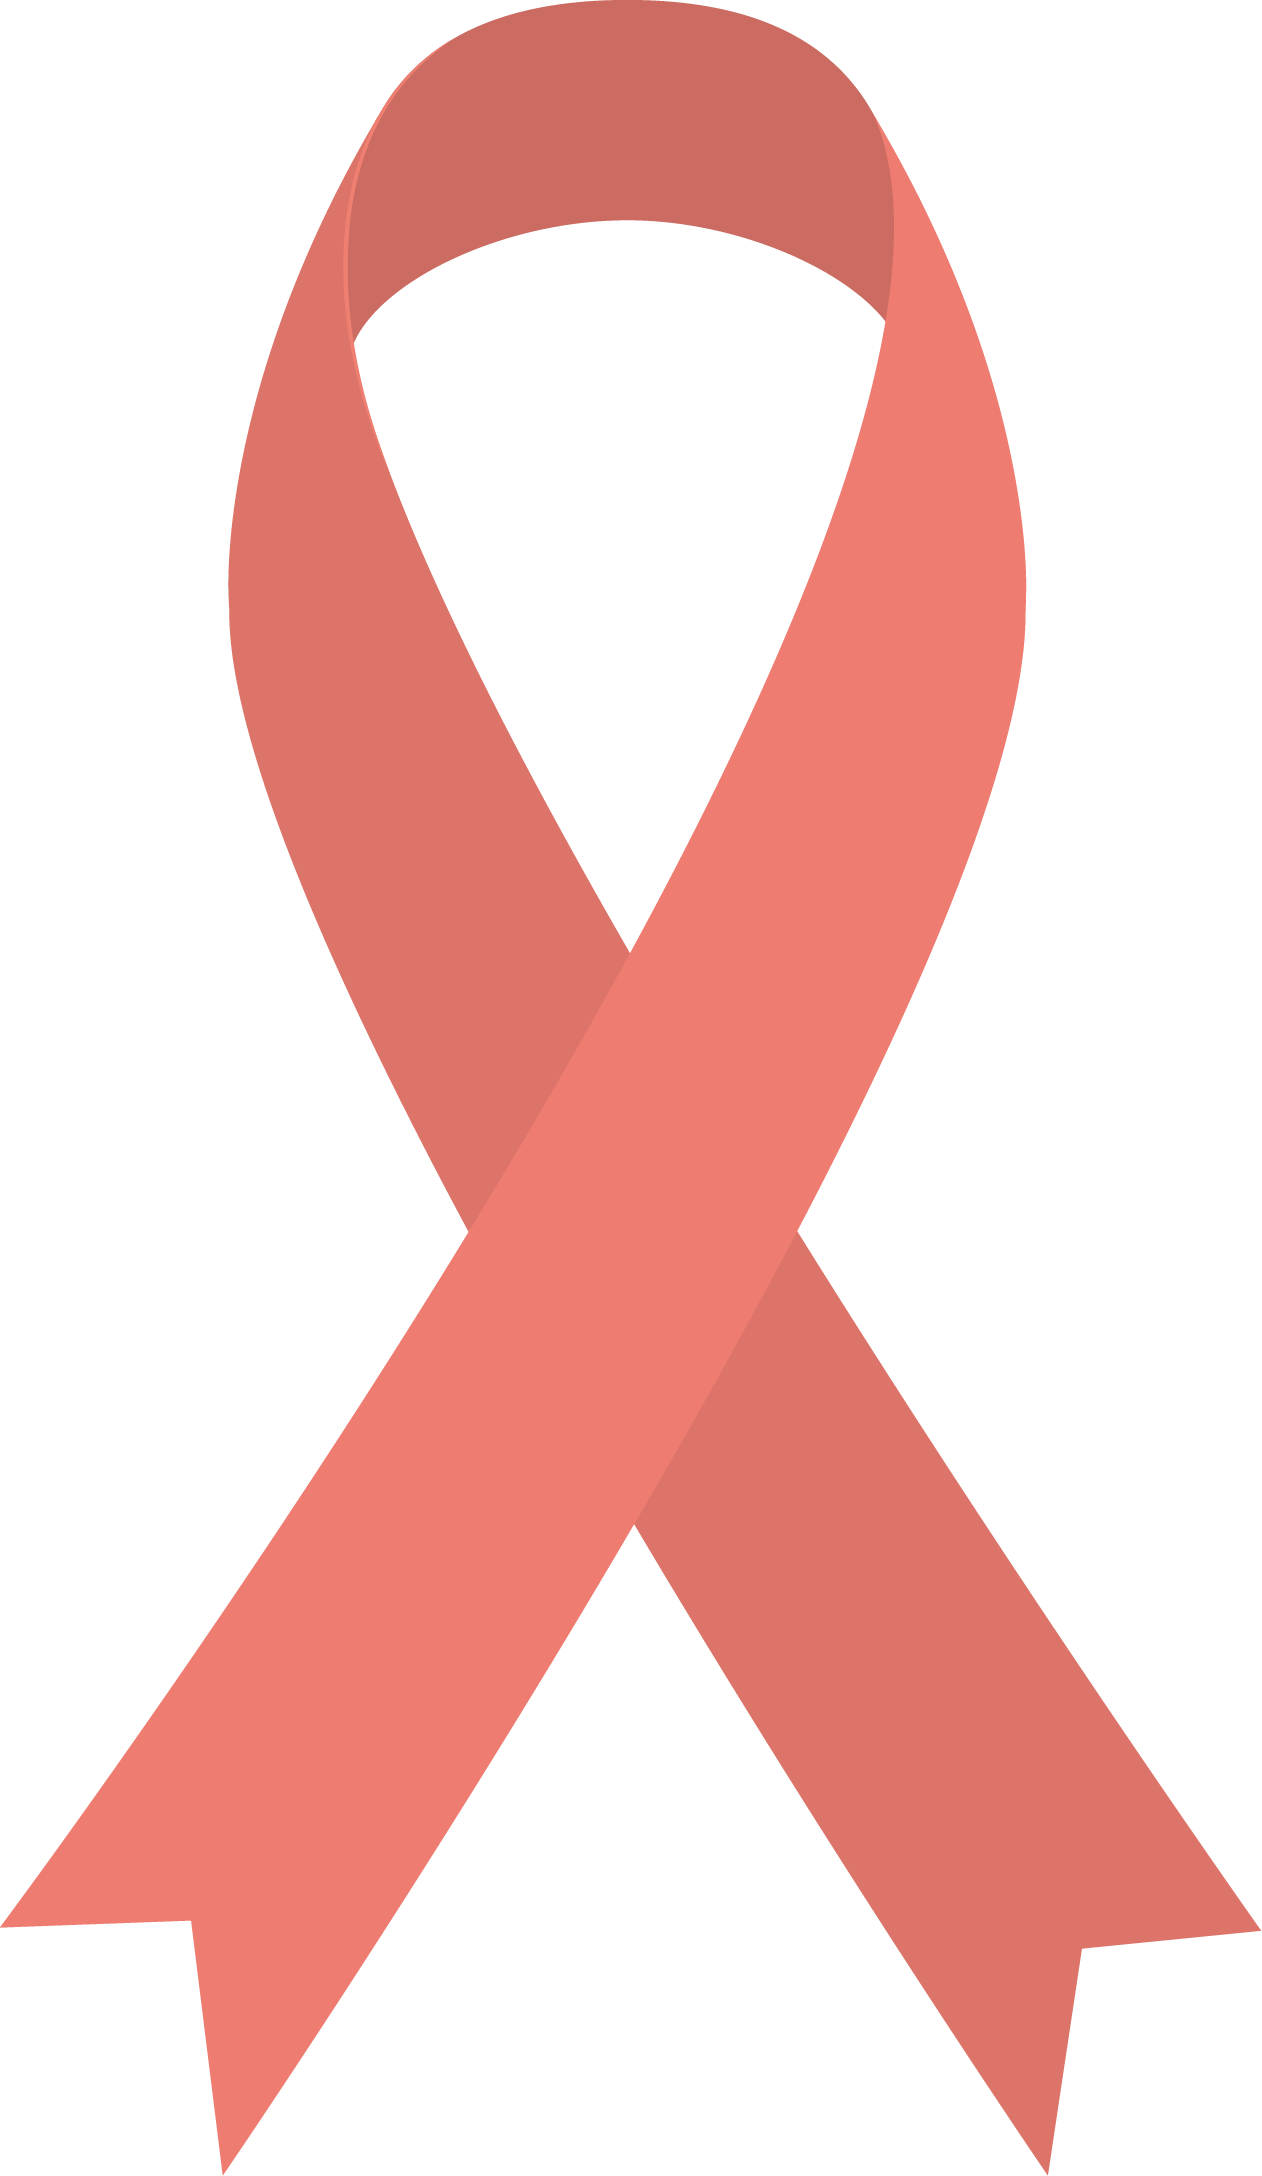 Logo Cancer